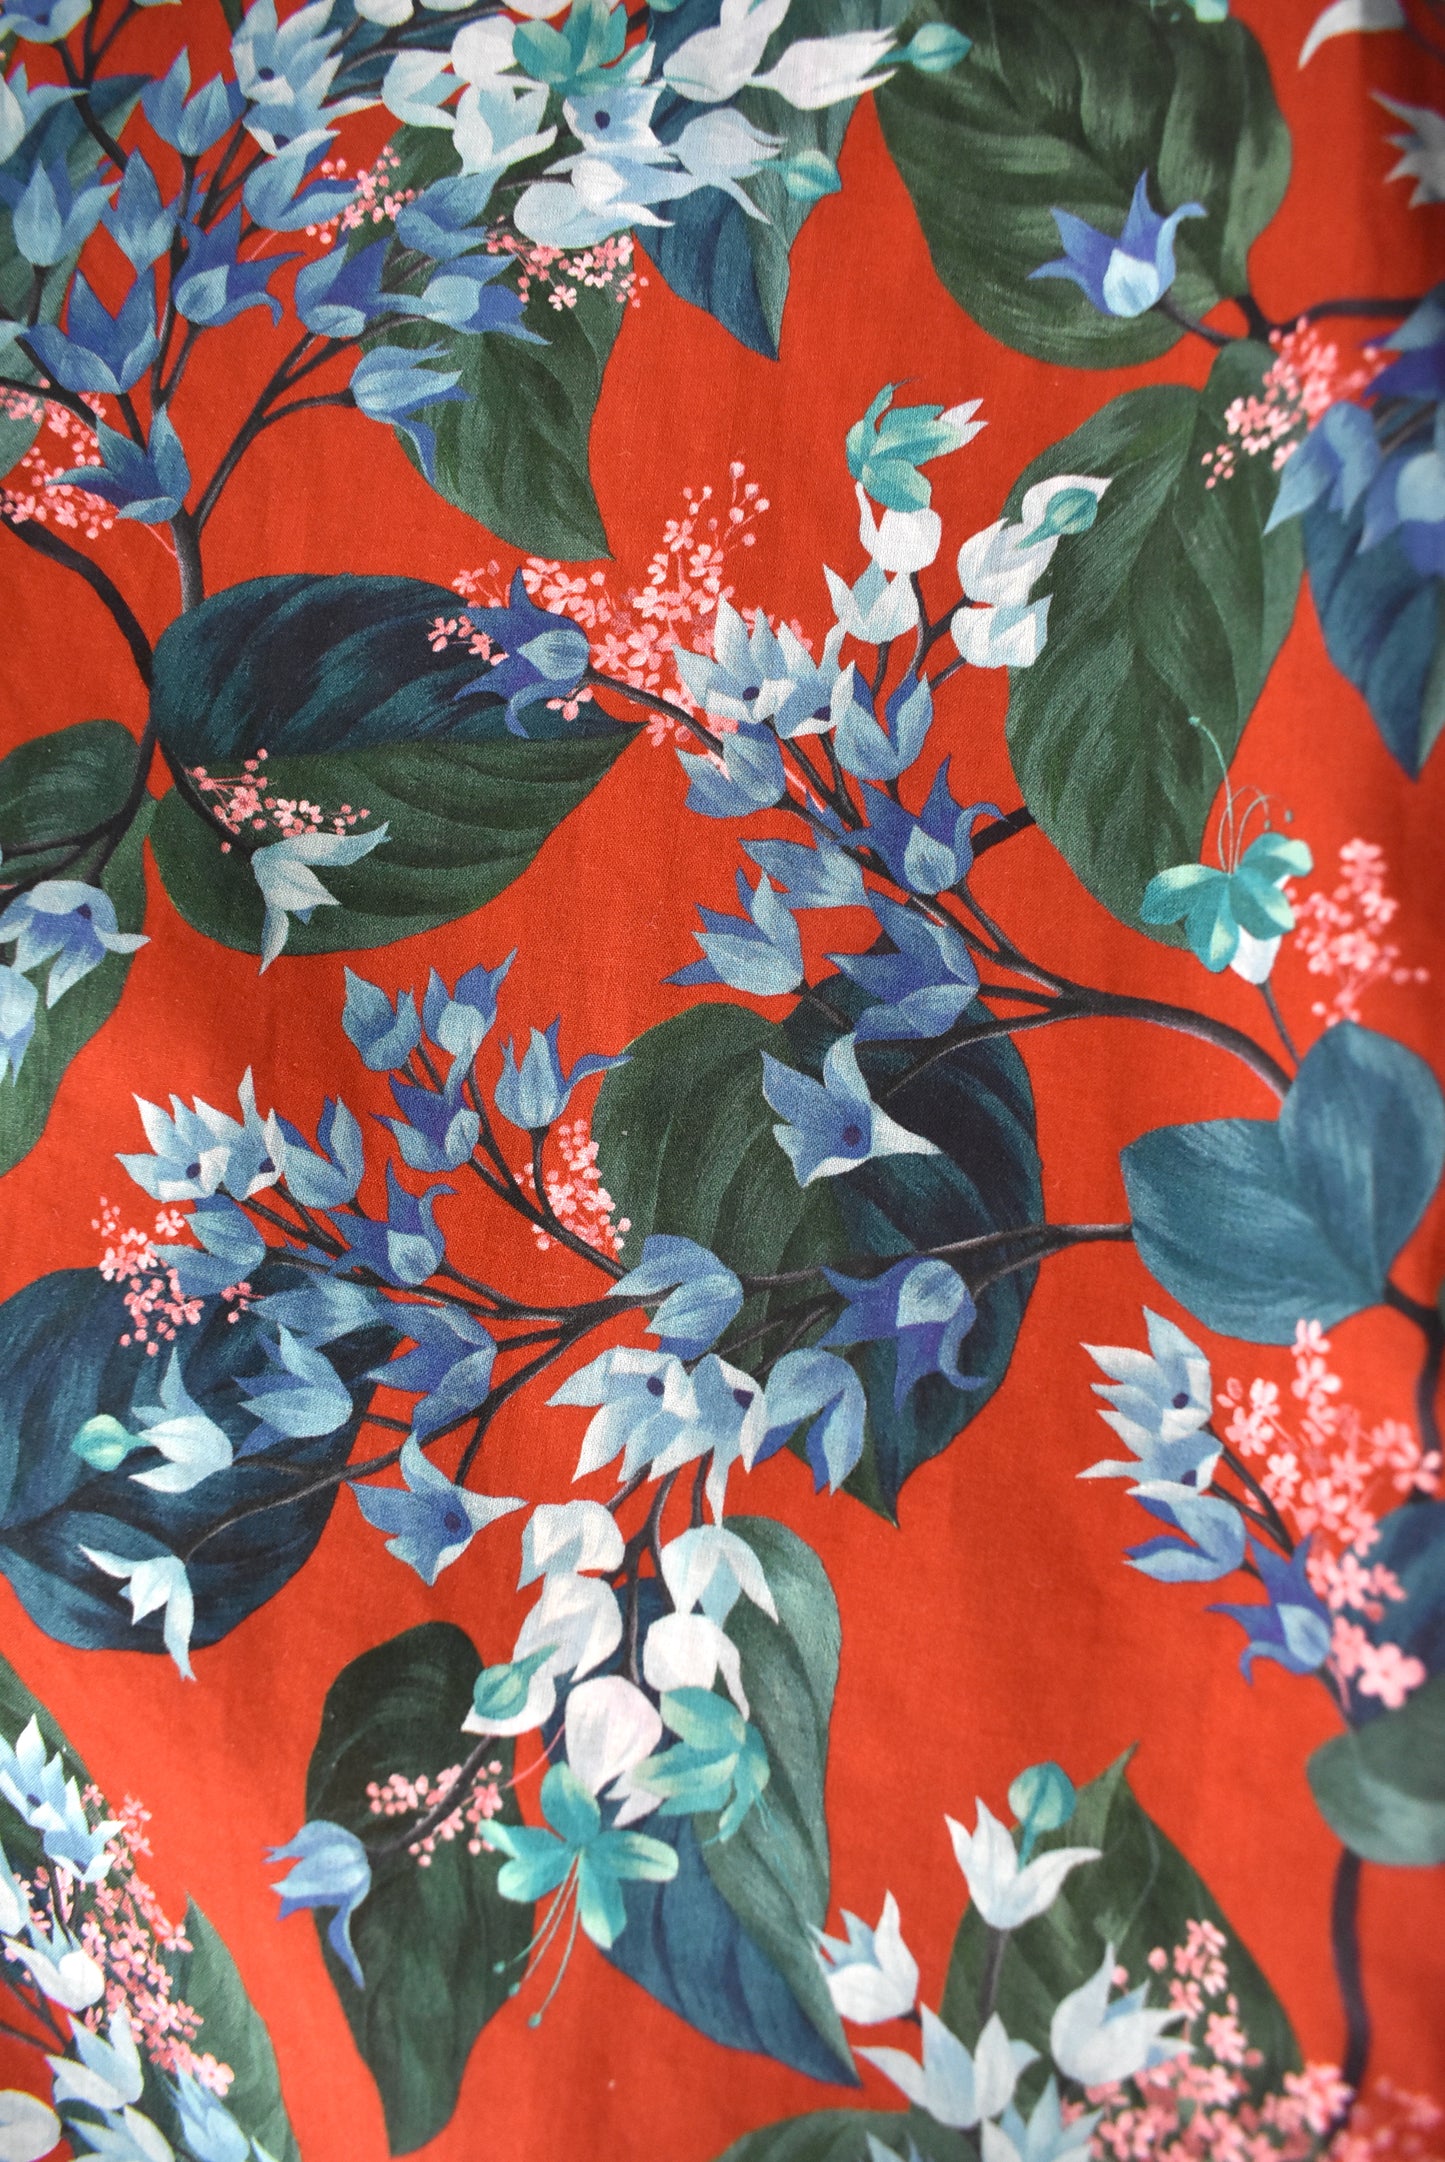 Classic Pyjama bottoms - Liberty London - red floral print